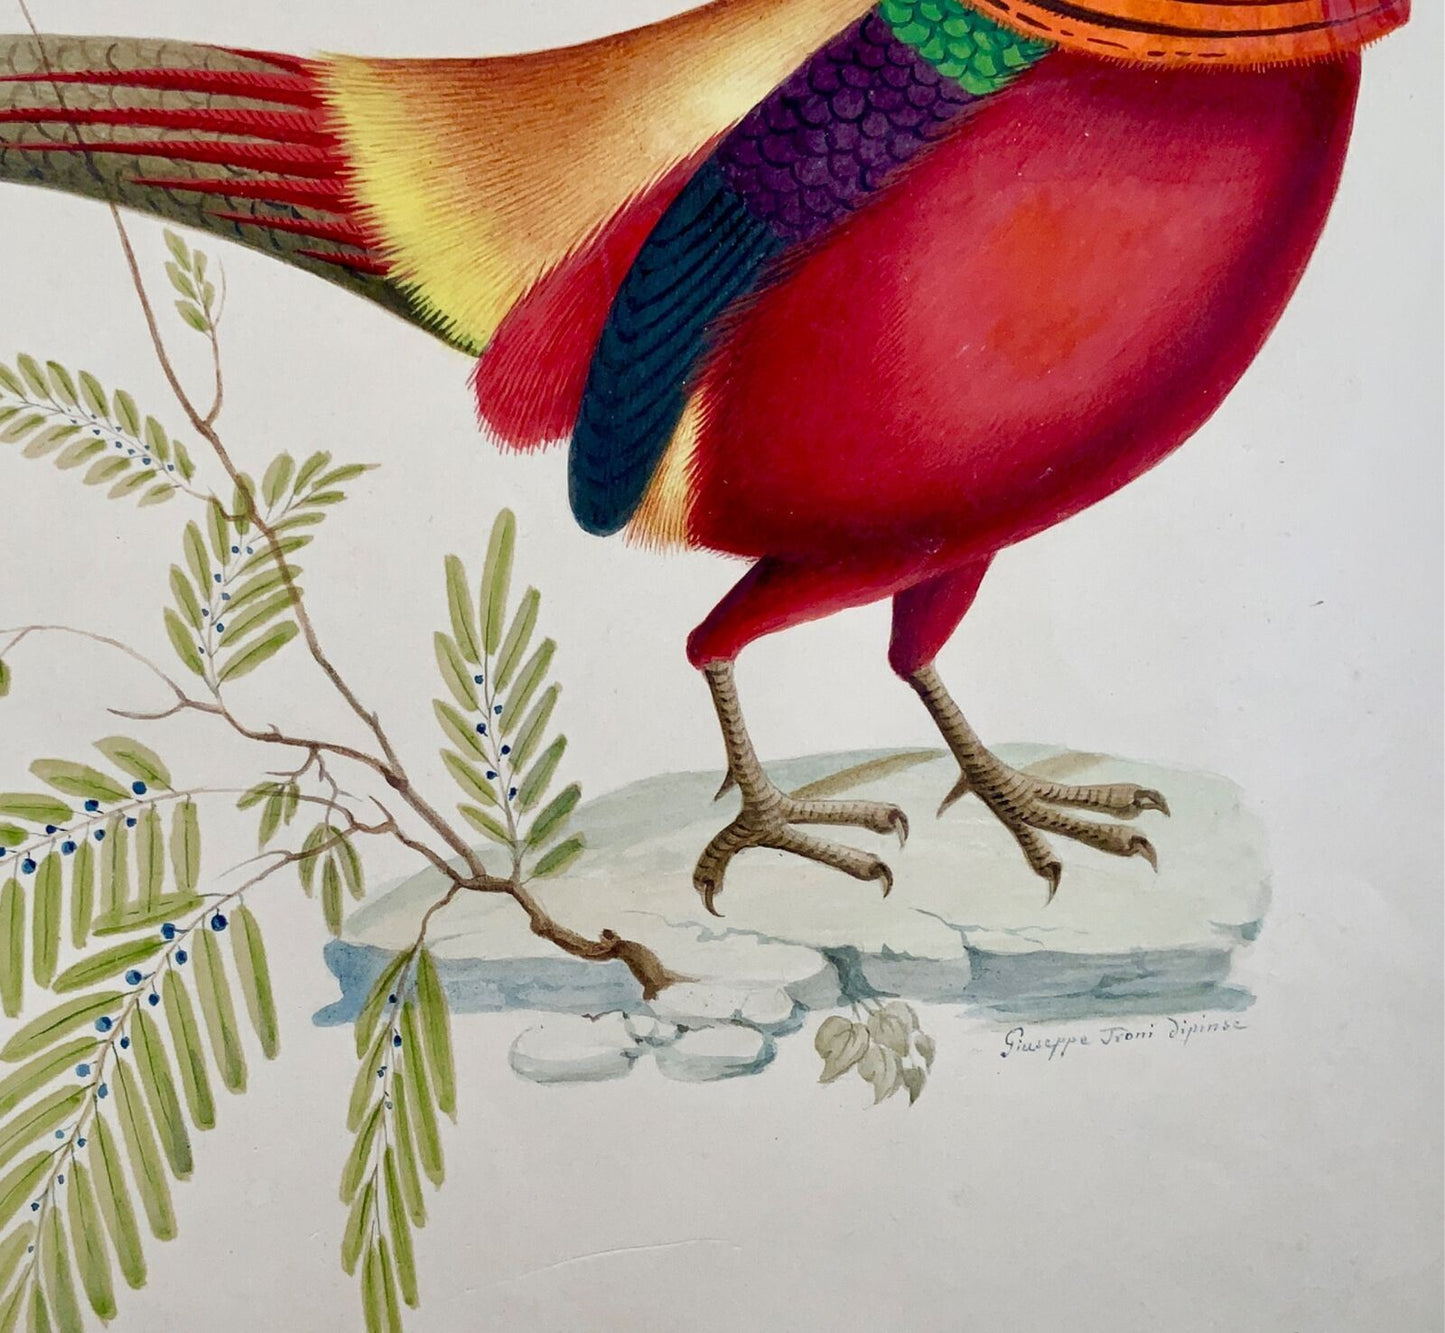 1790 ca Giuseppe Troni (1739-1810) Faisan doré, gouache grand format, ornithologie